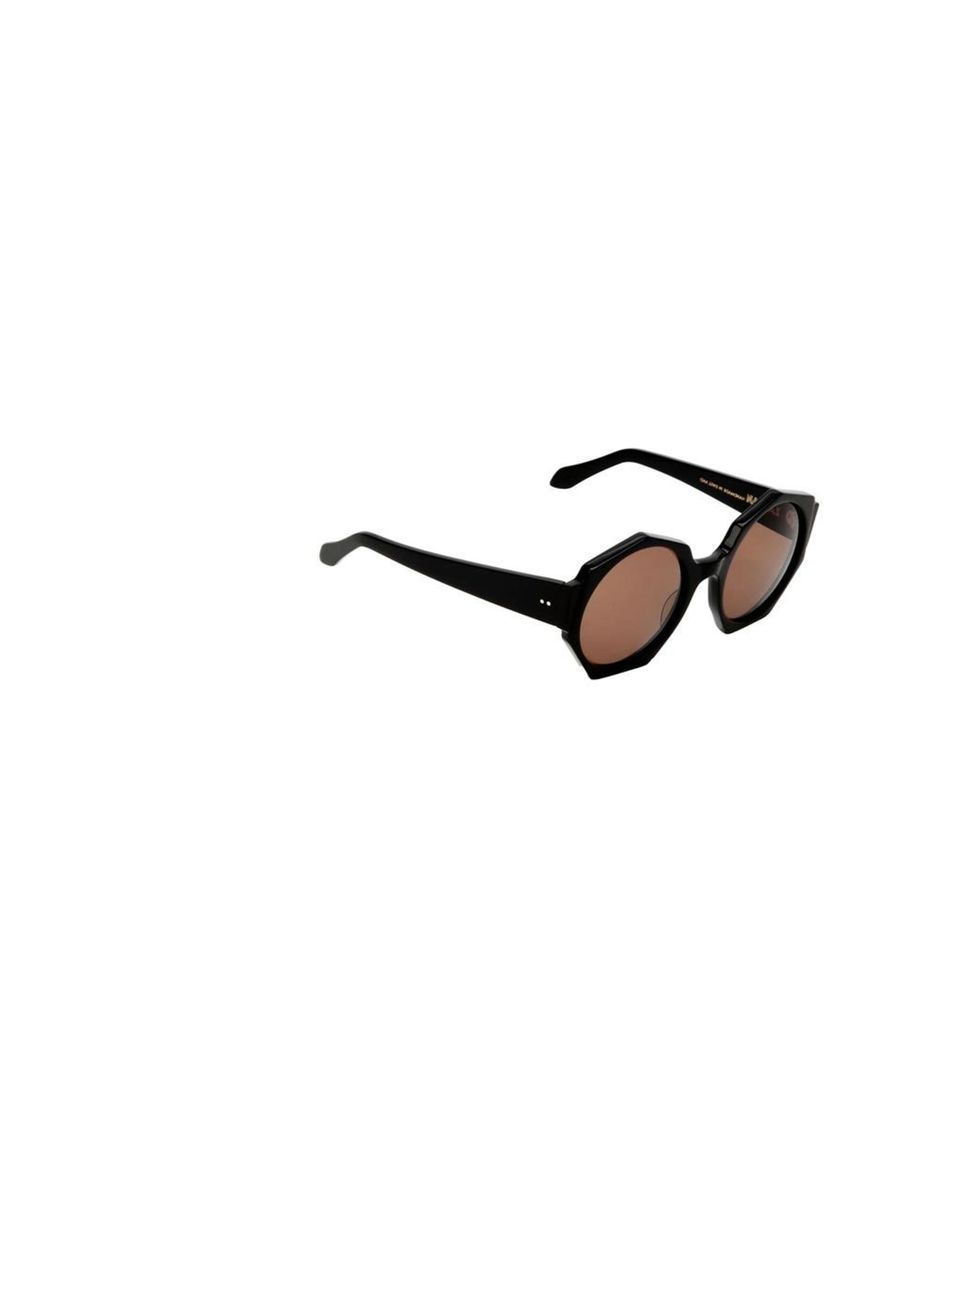 <p>Zanzan 'Avida' sunglasses, £260, at <a href="http://www.farfetch.com/shopping/women/designer-zanzan-zanzan-ortolan-sunglasses-item-10189813.aspx">Farfetch</a></p>